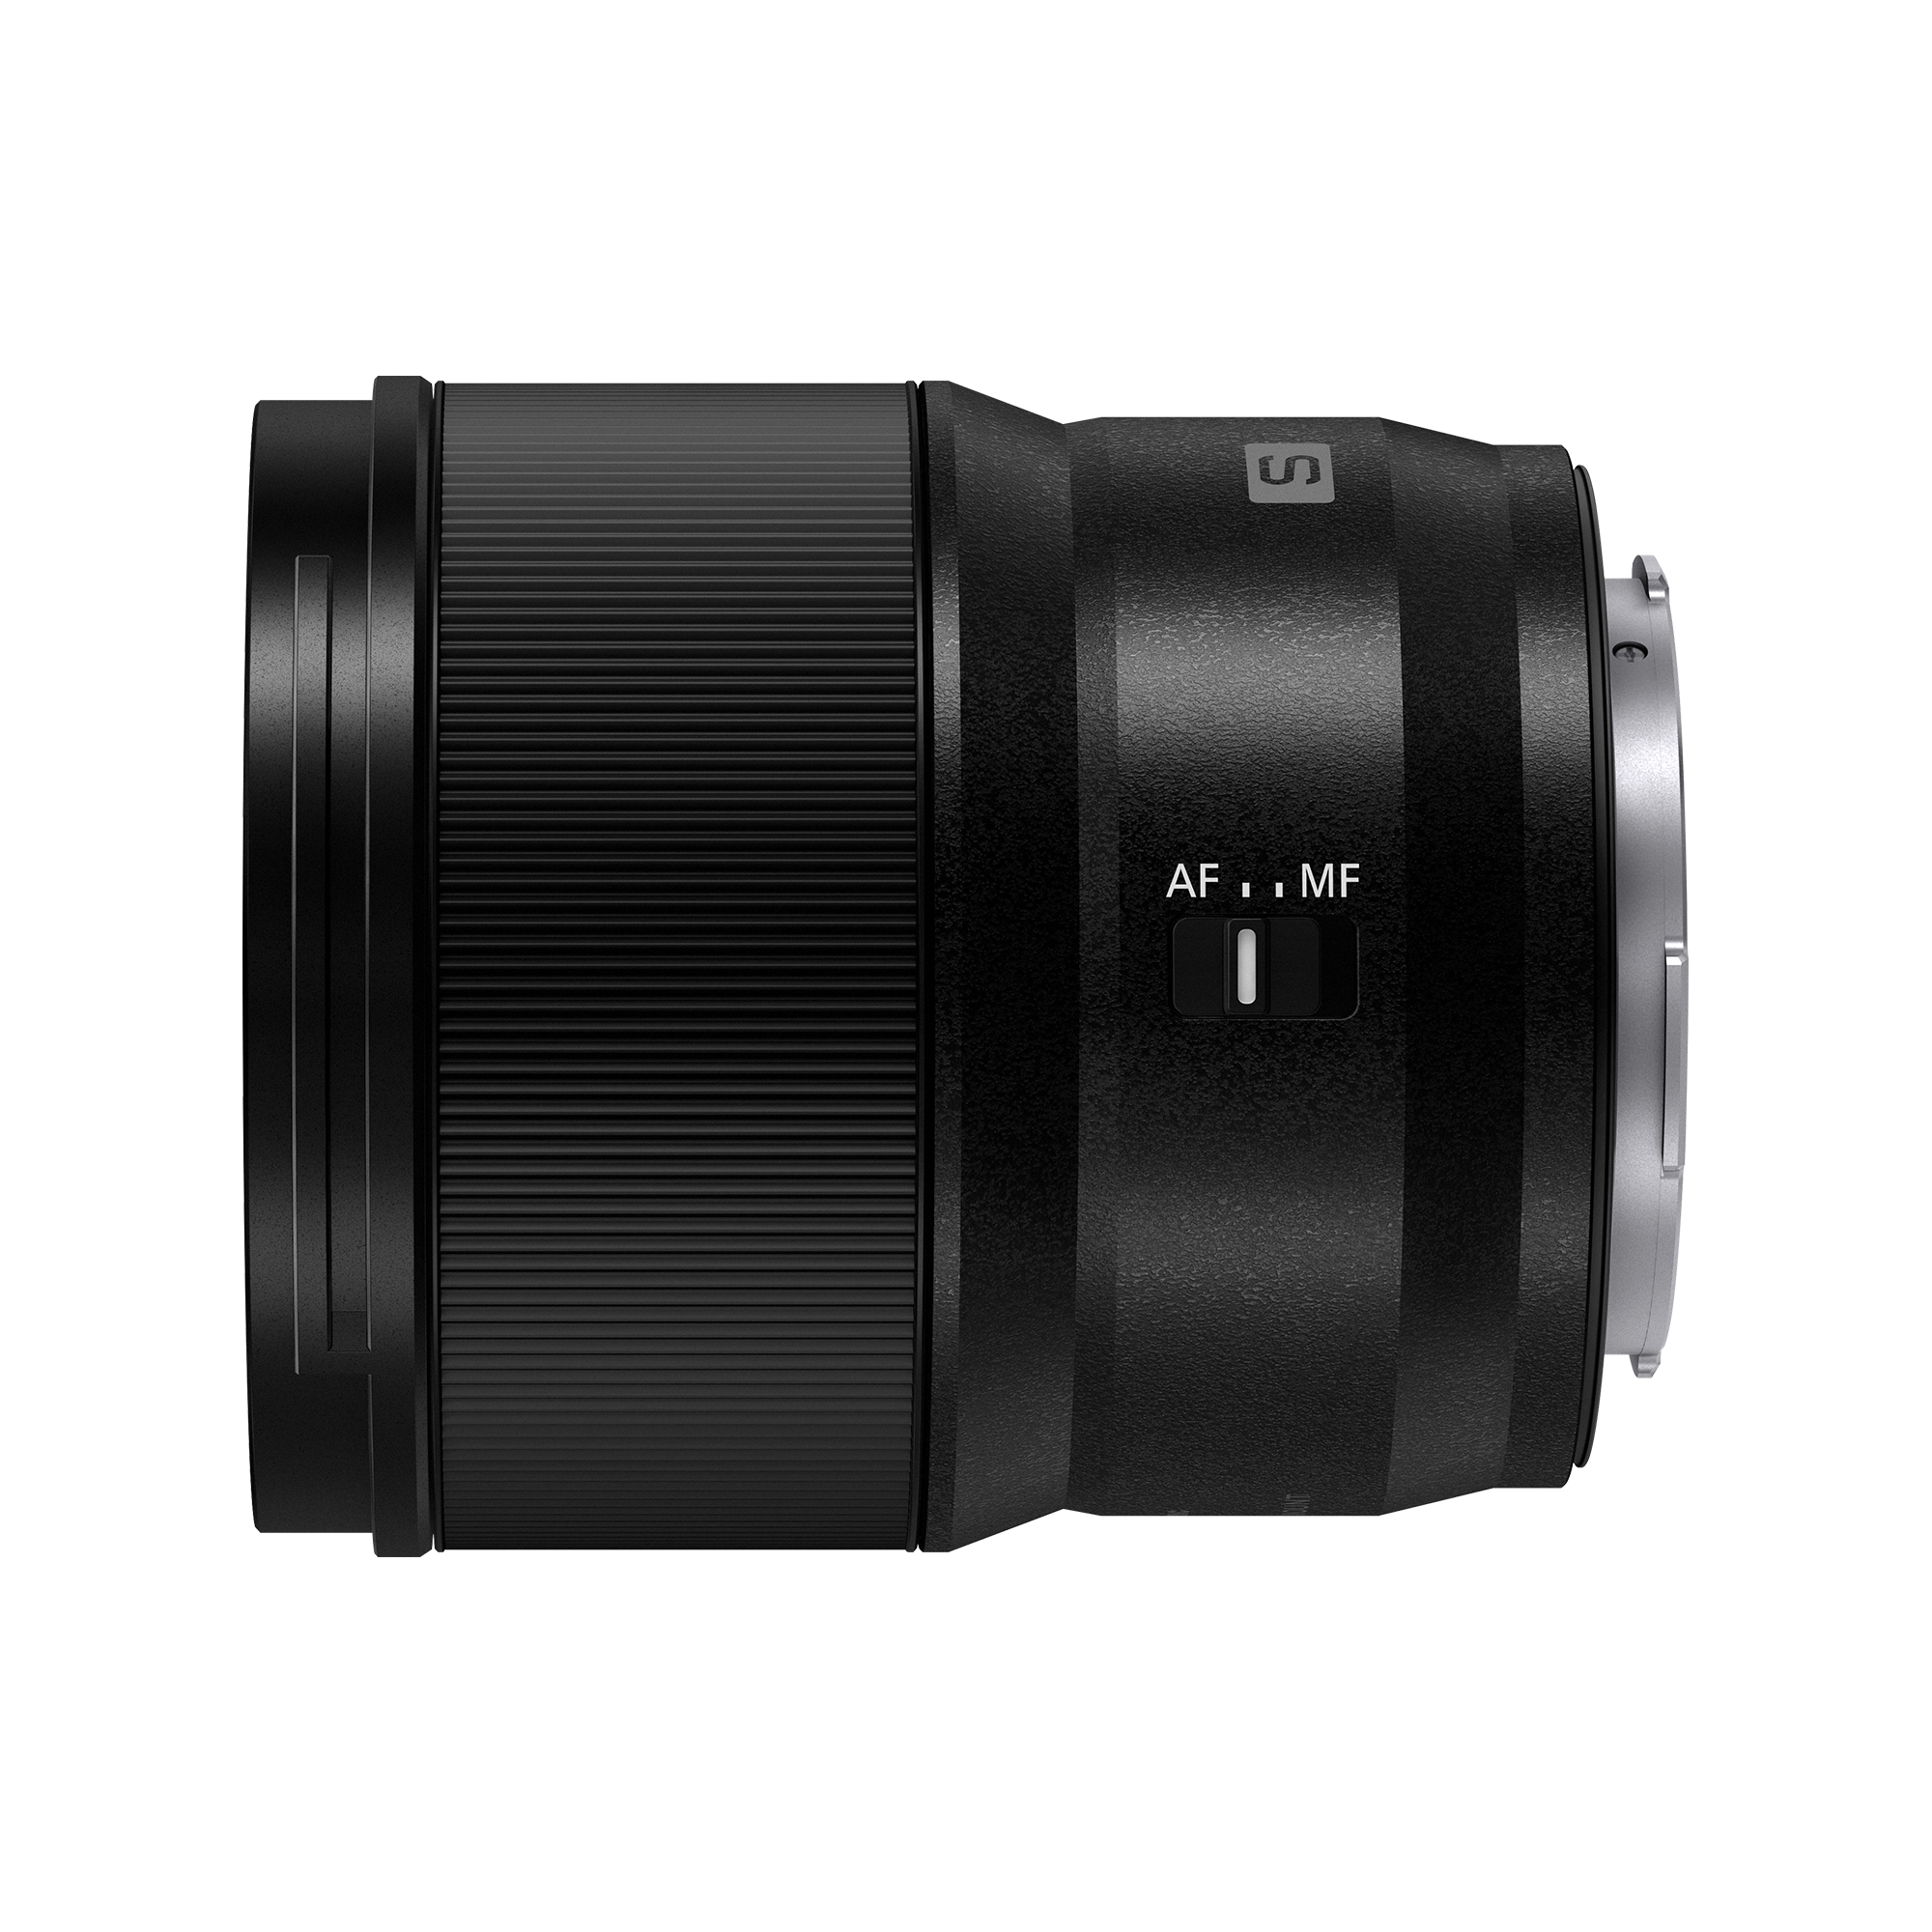 S Series 50mm F1.8 L-Mount Lens